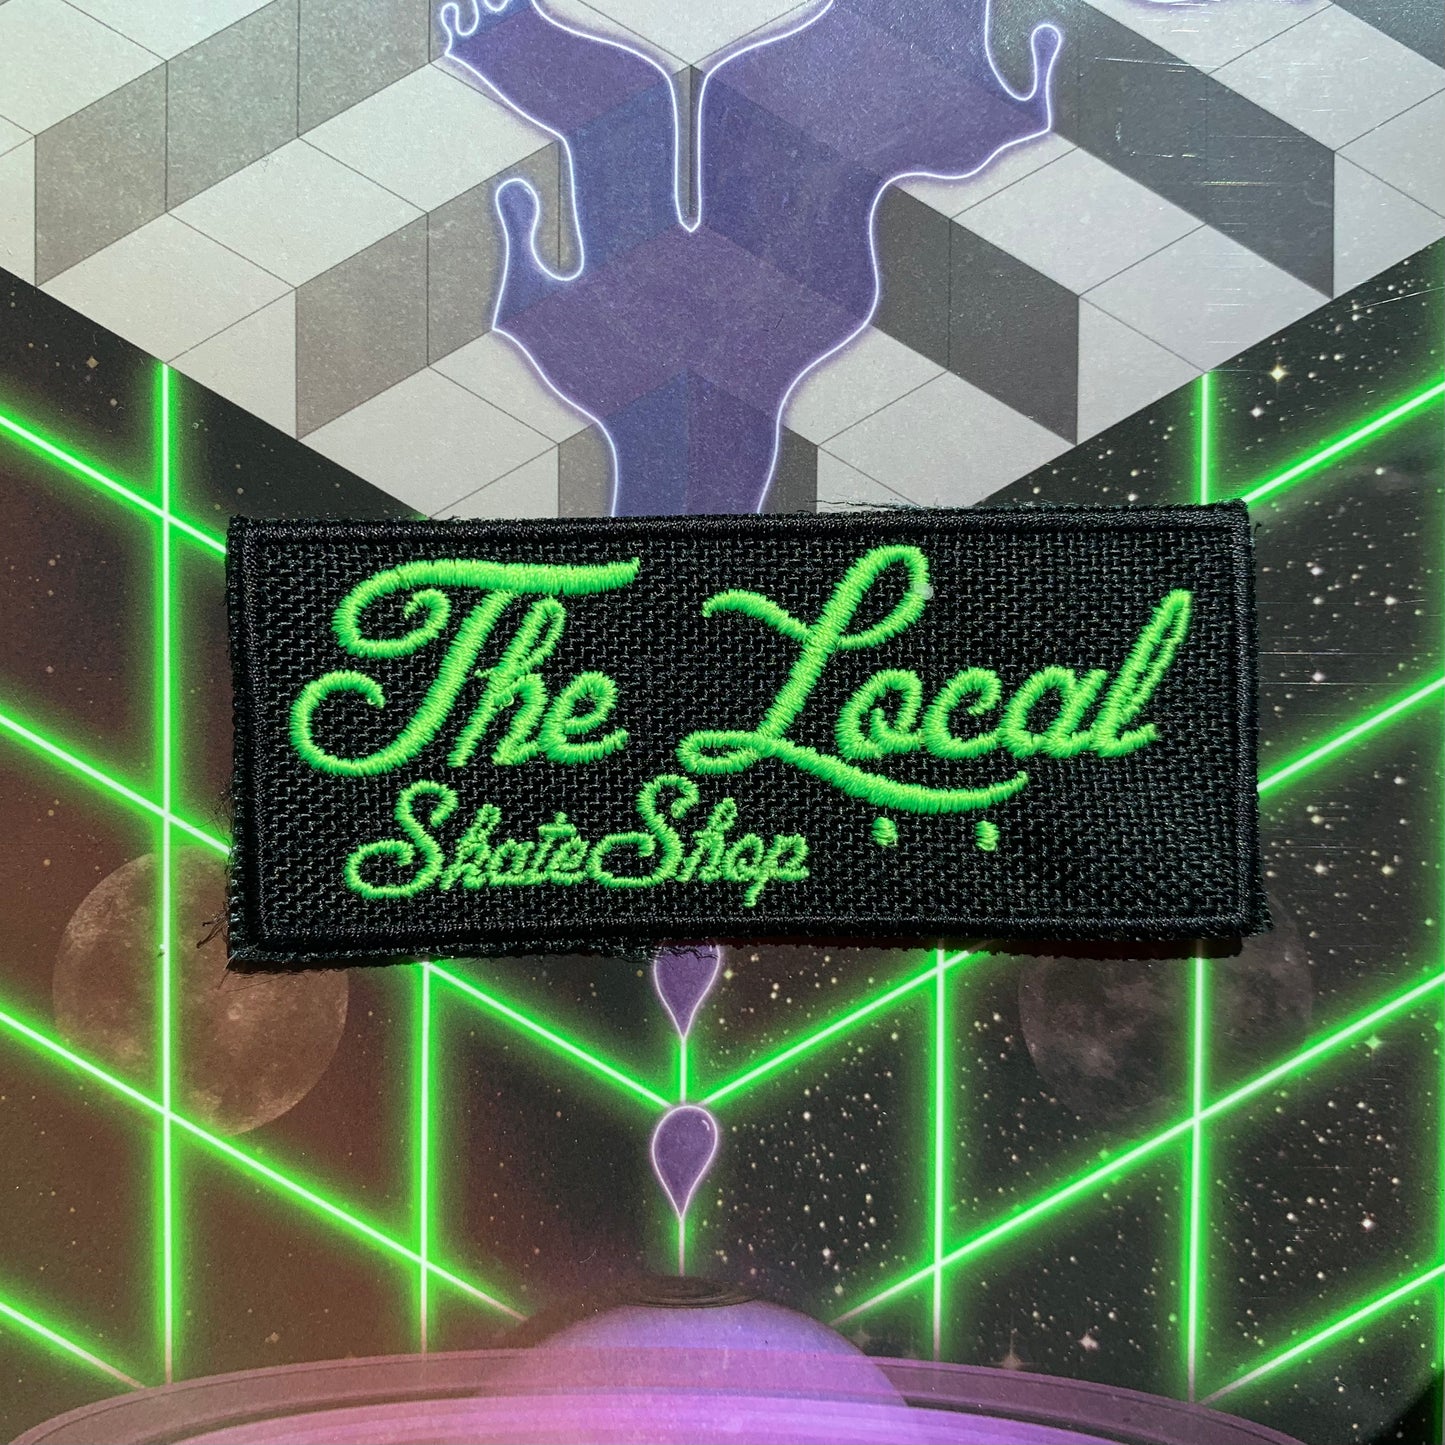 THE LOCAL SKATE SHOP - GREEN